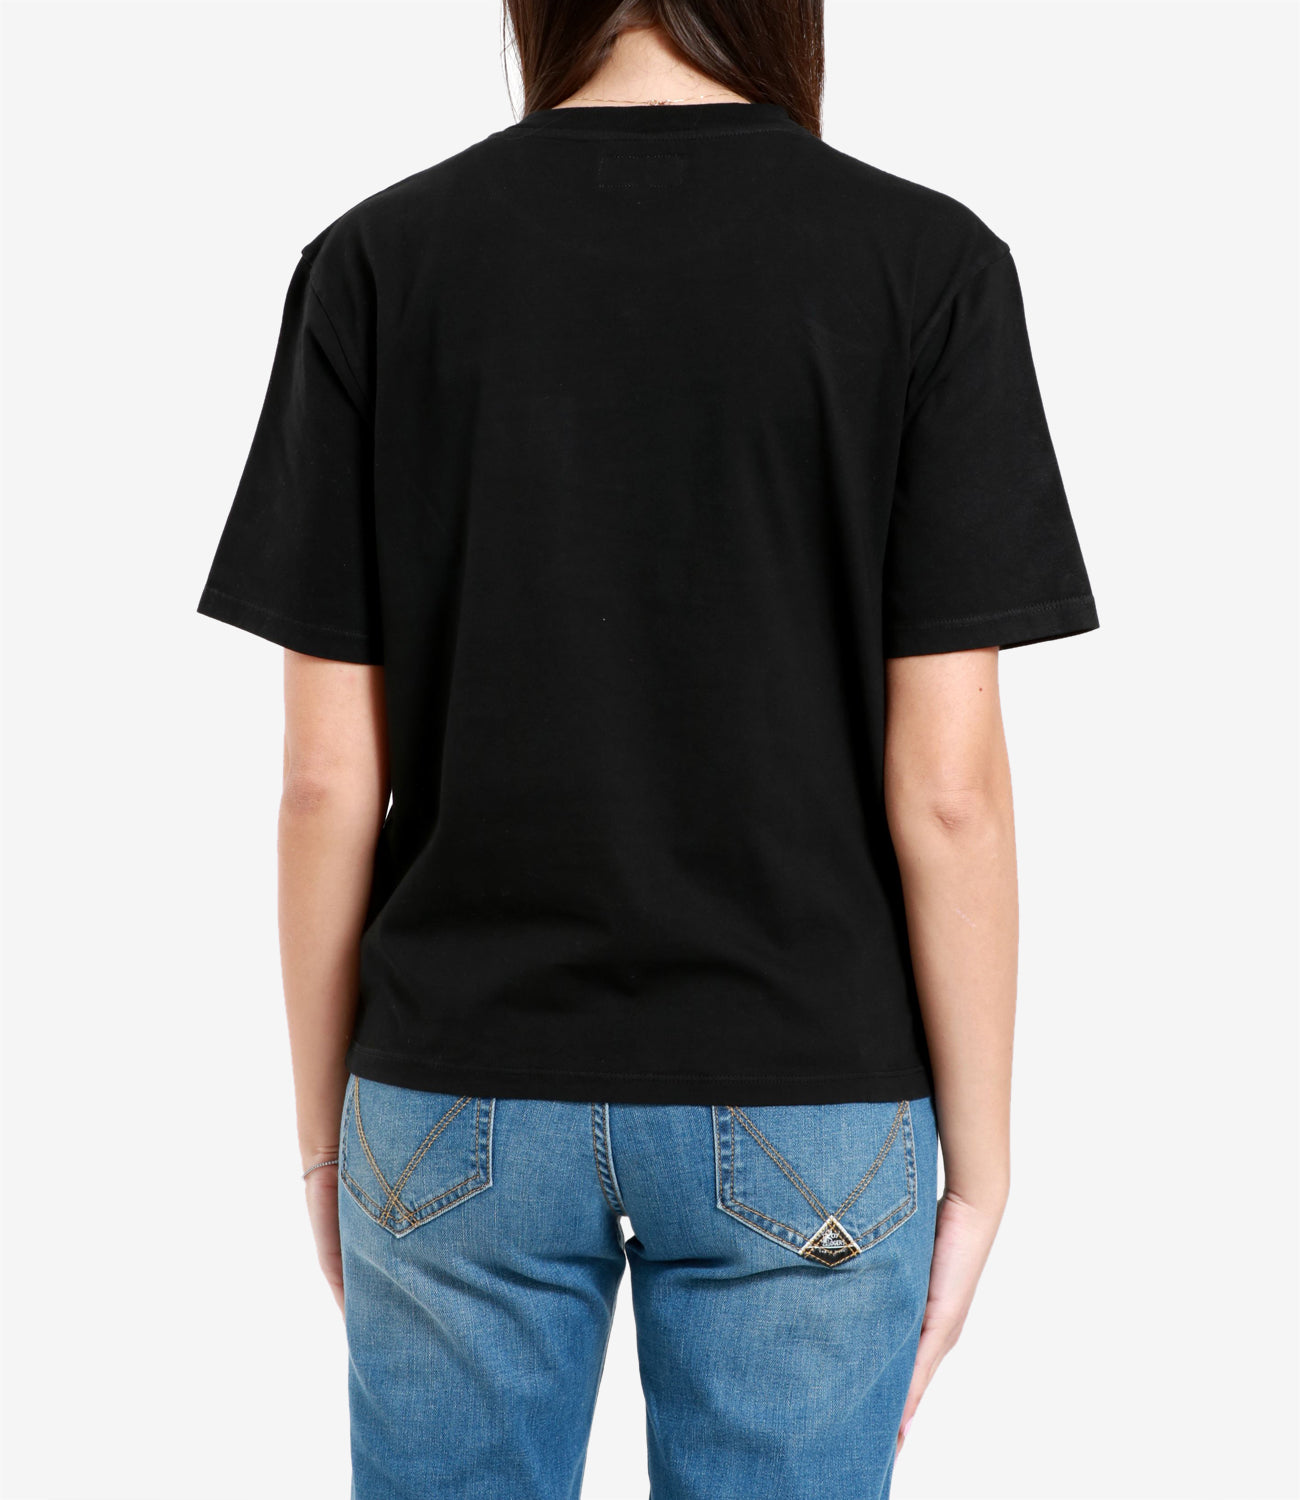 Roy Roger's | Black Lamé Pocket T-Shirt